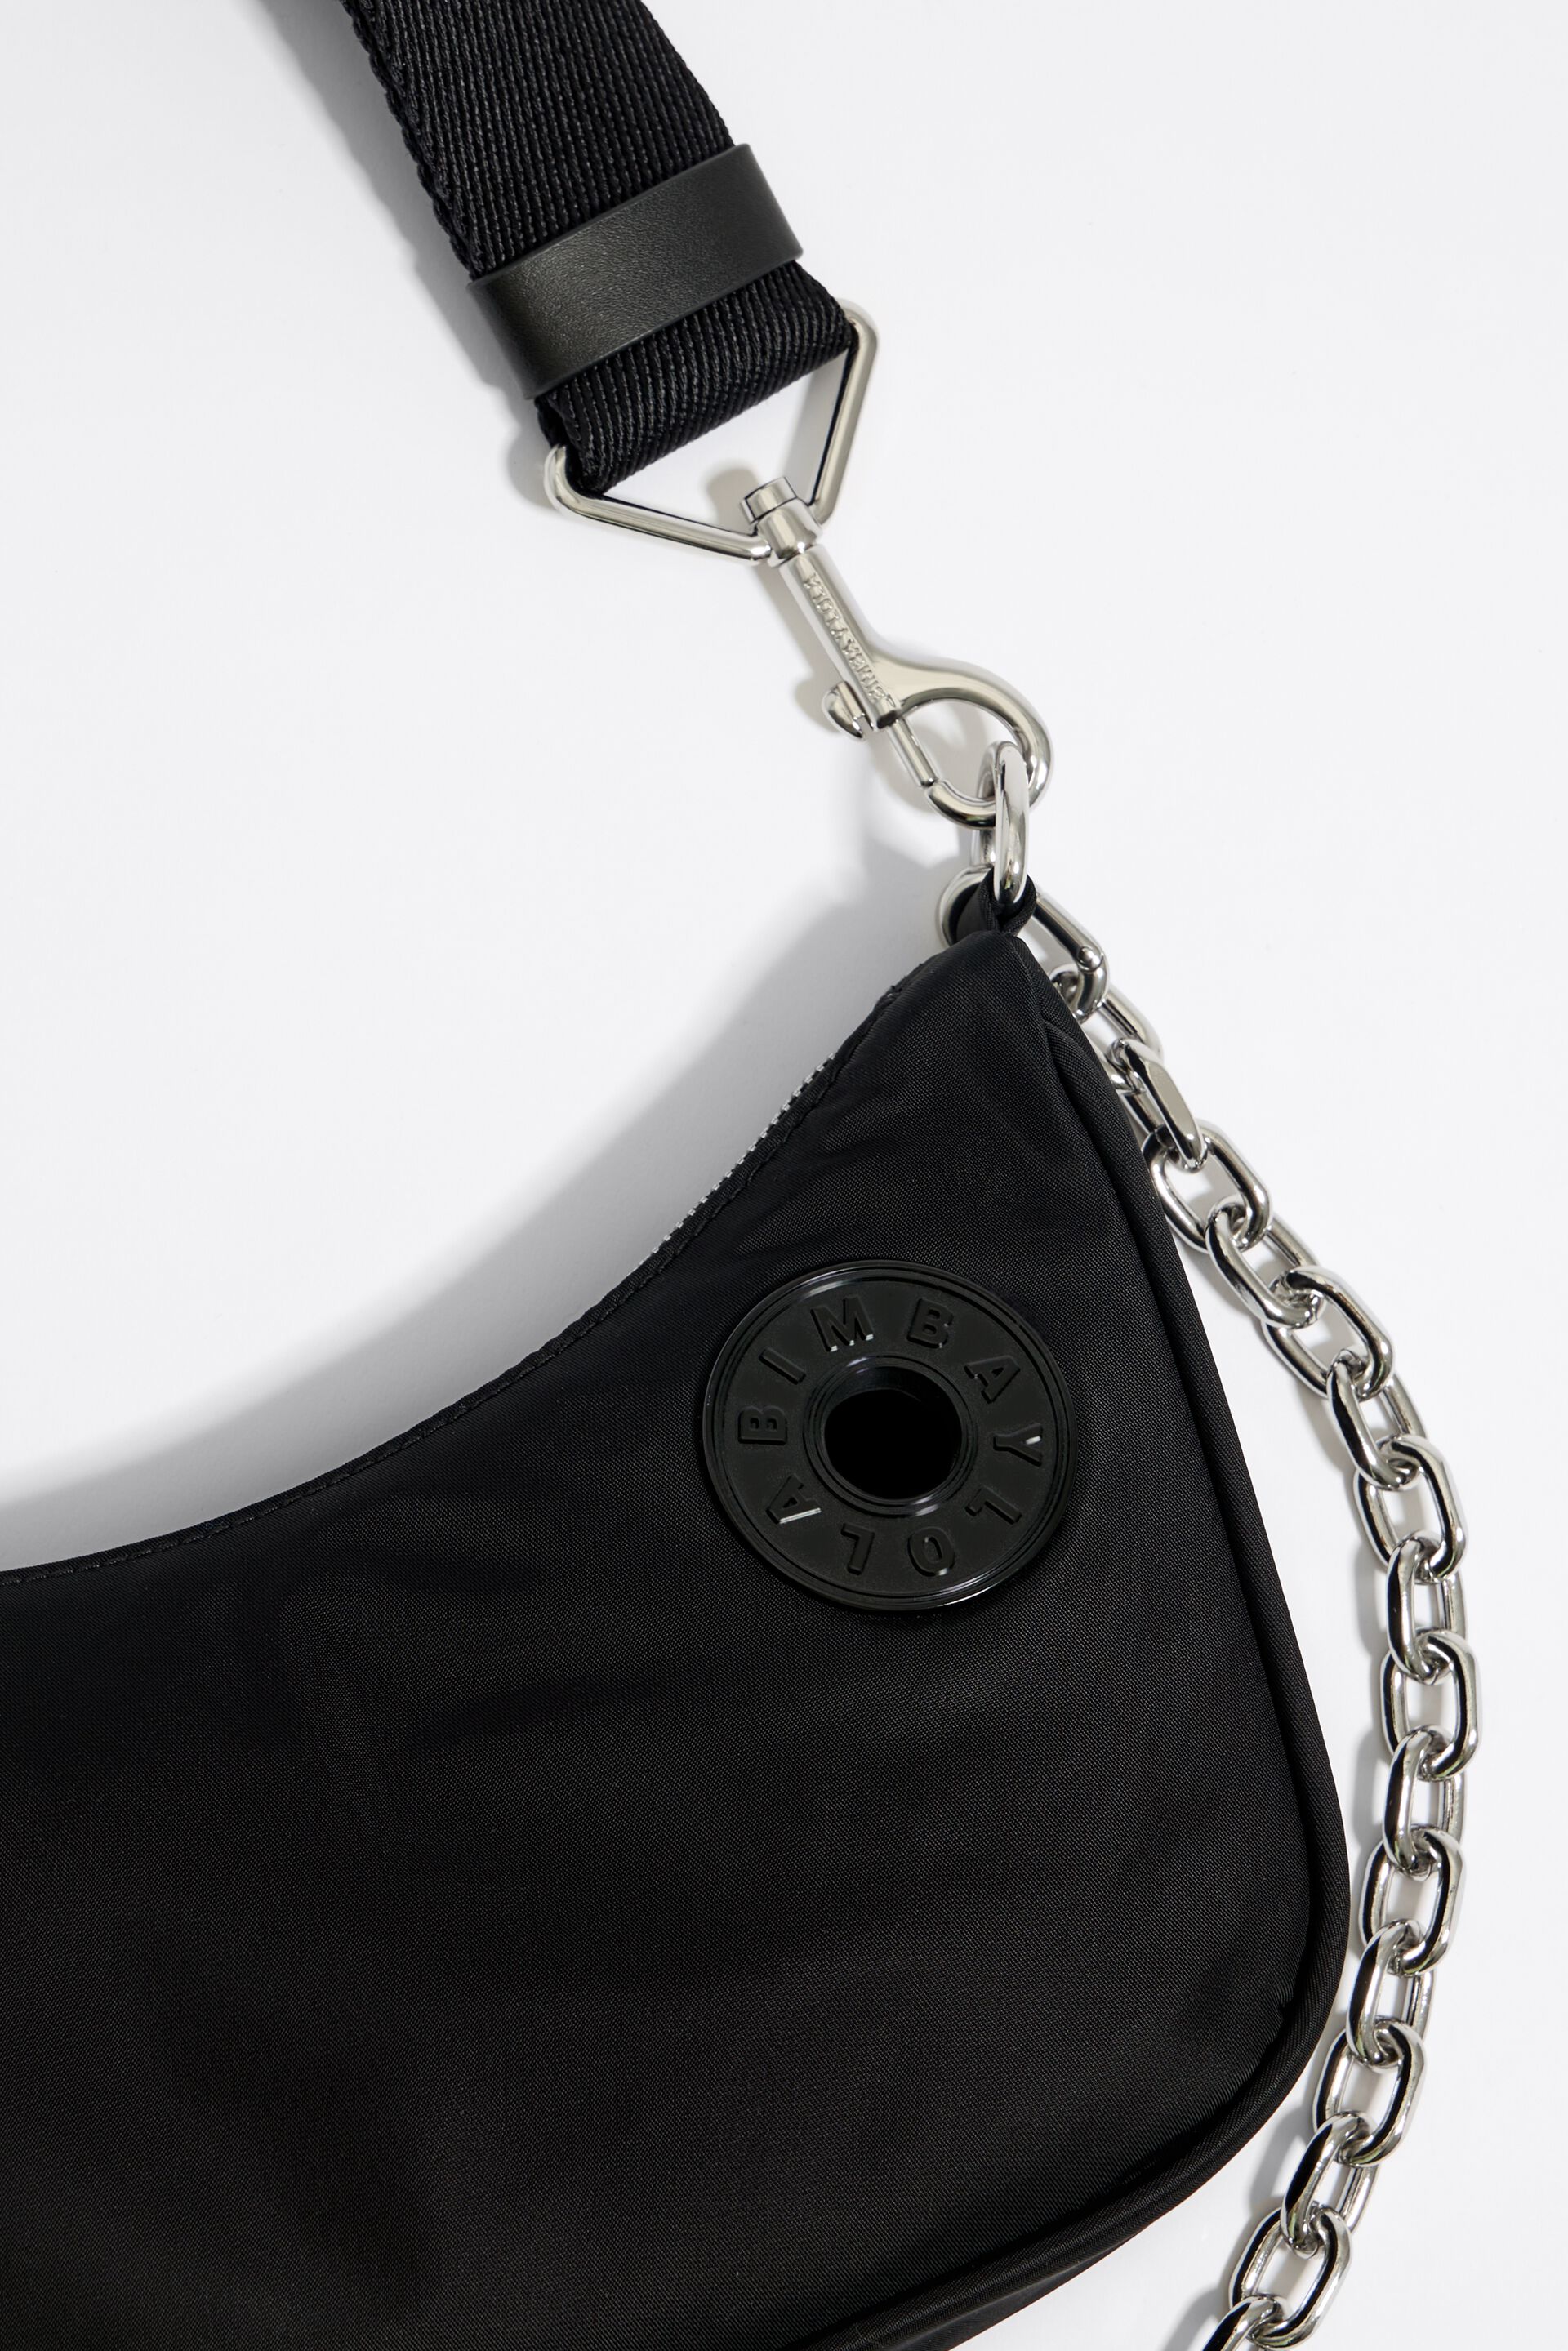 Shop bimba & lola S black nylon crossbody bag (231BBLJ1M.T2000) by Kinnie98